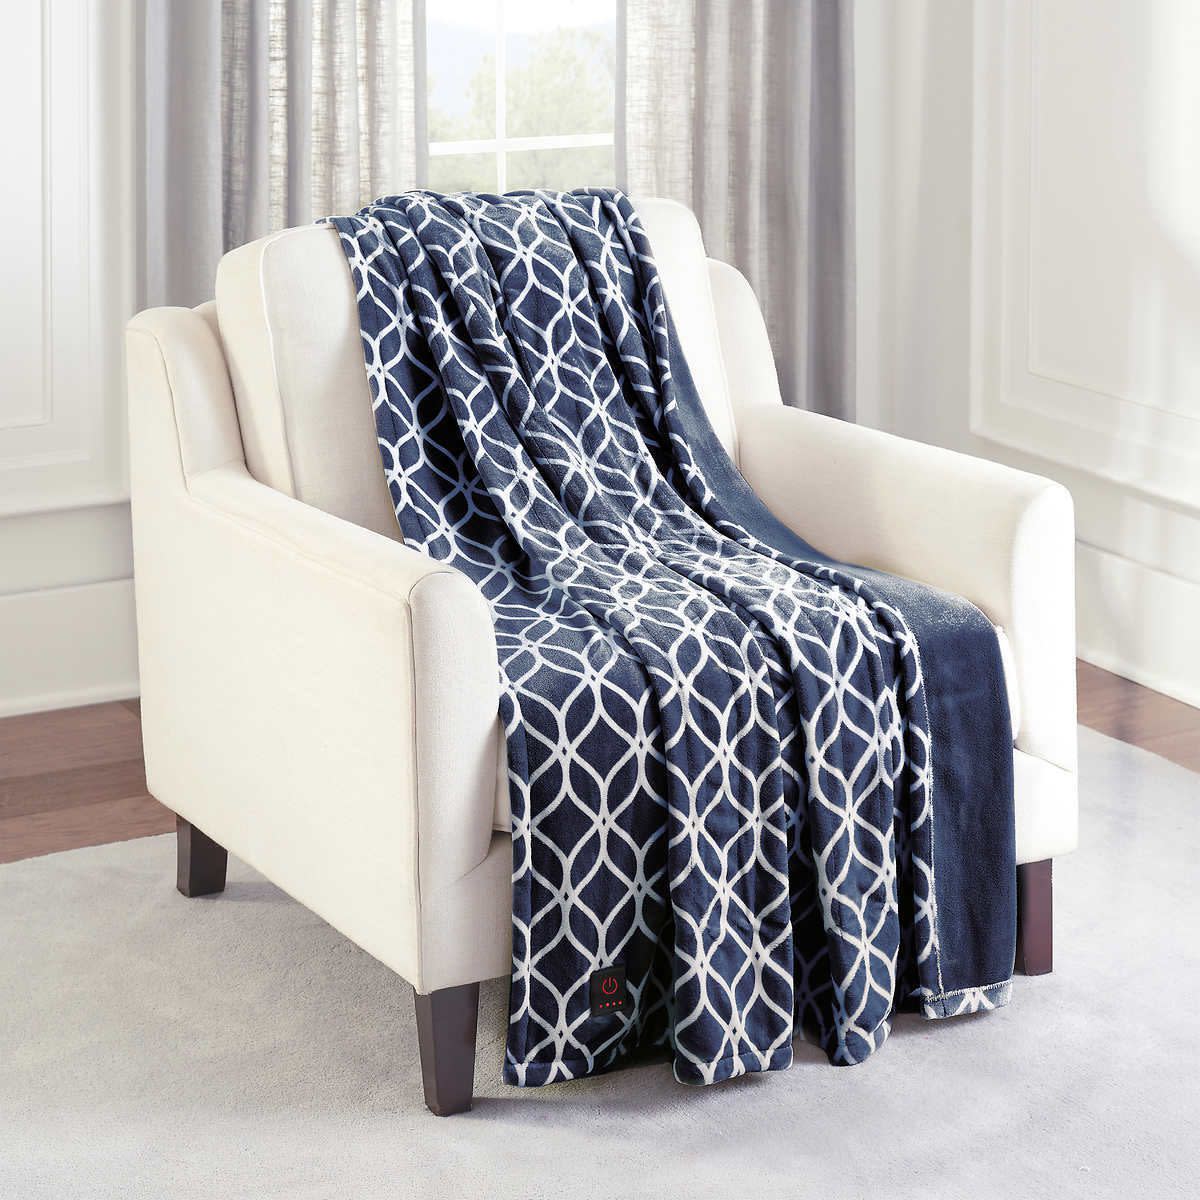 Brookstone Heated Throw Blanket on chair